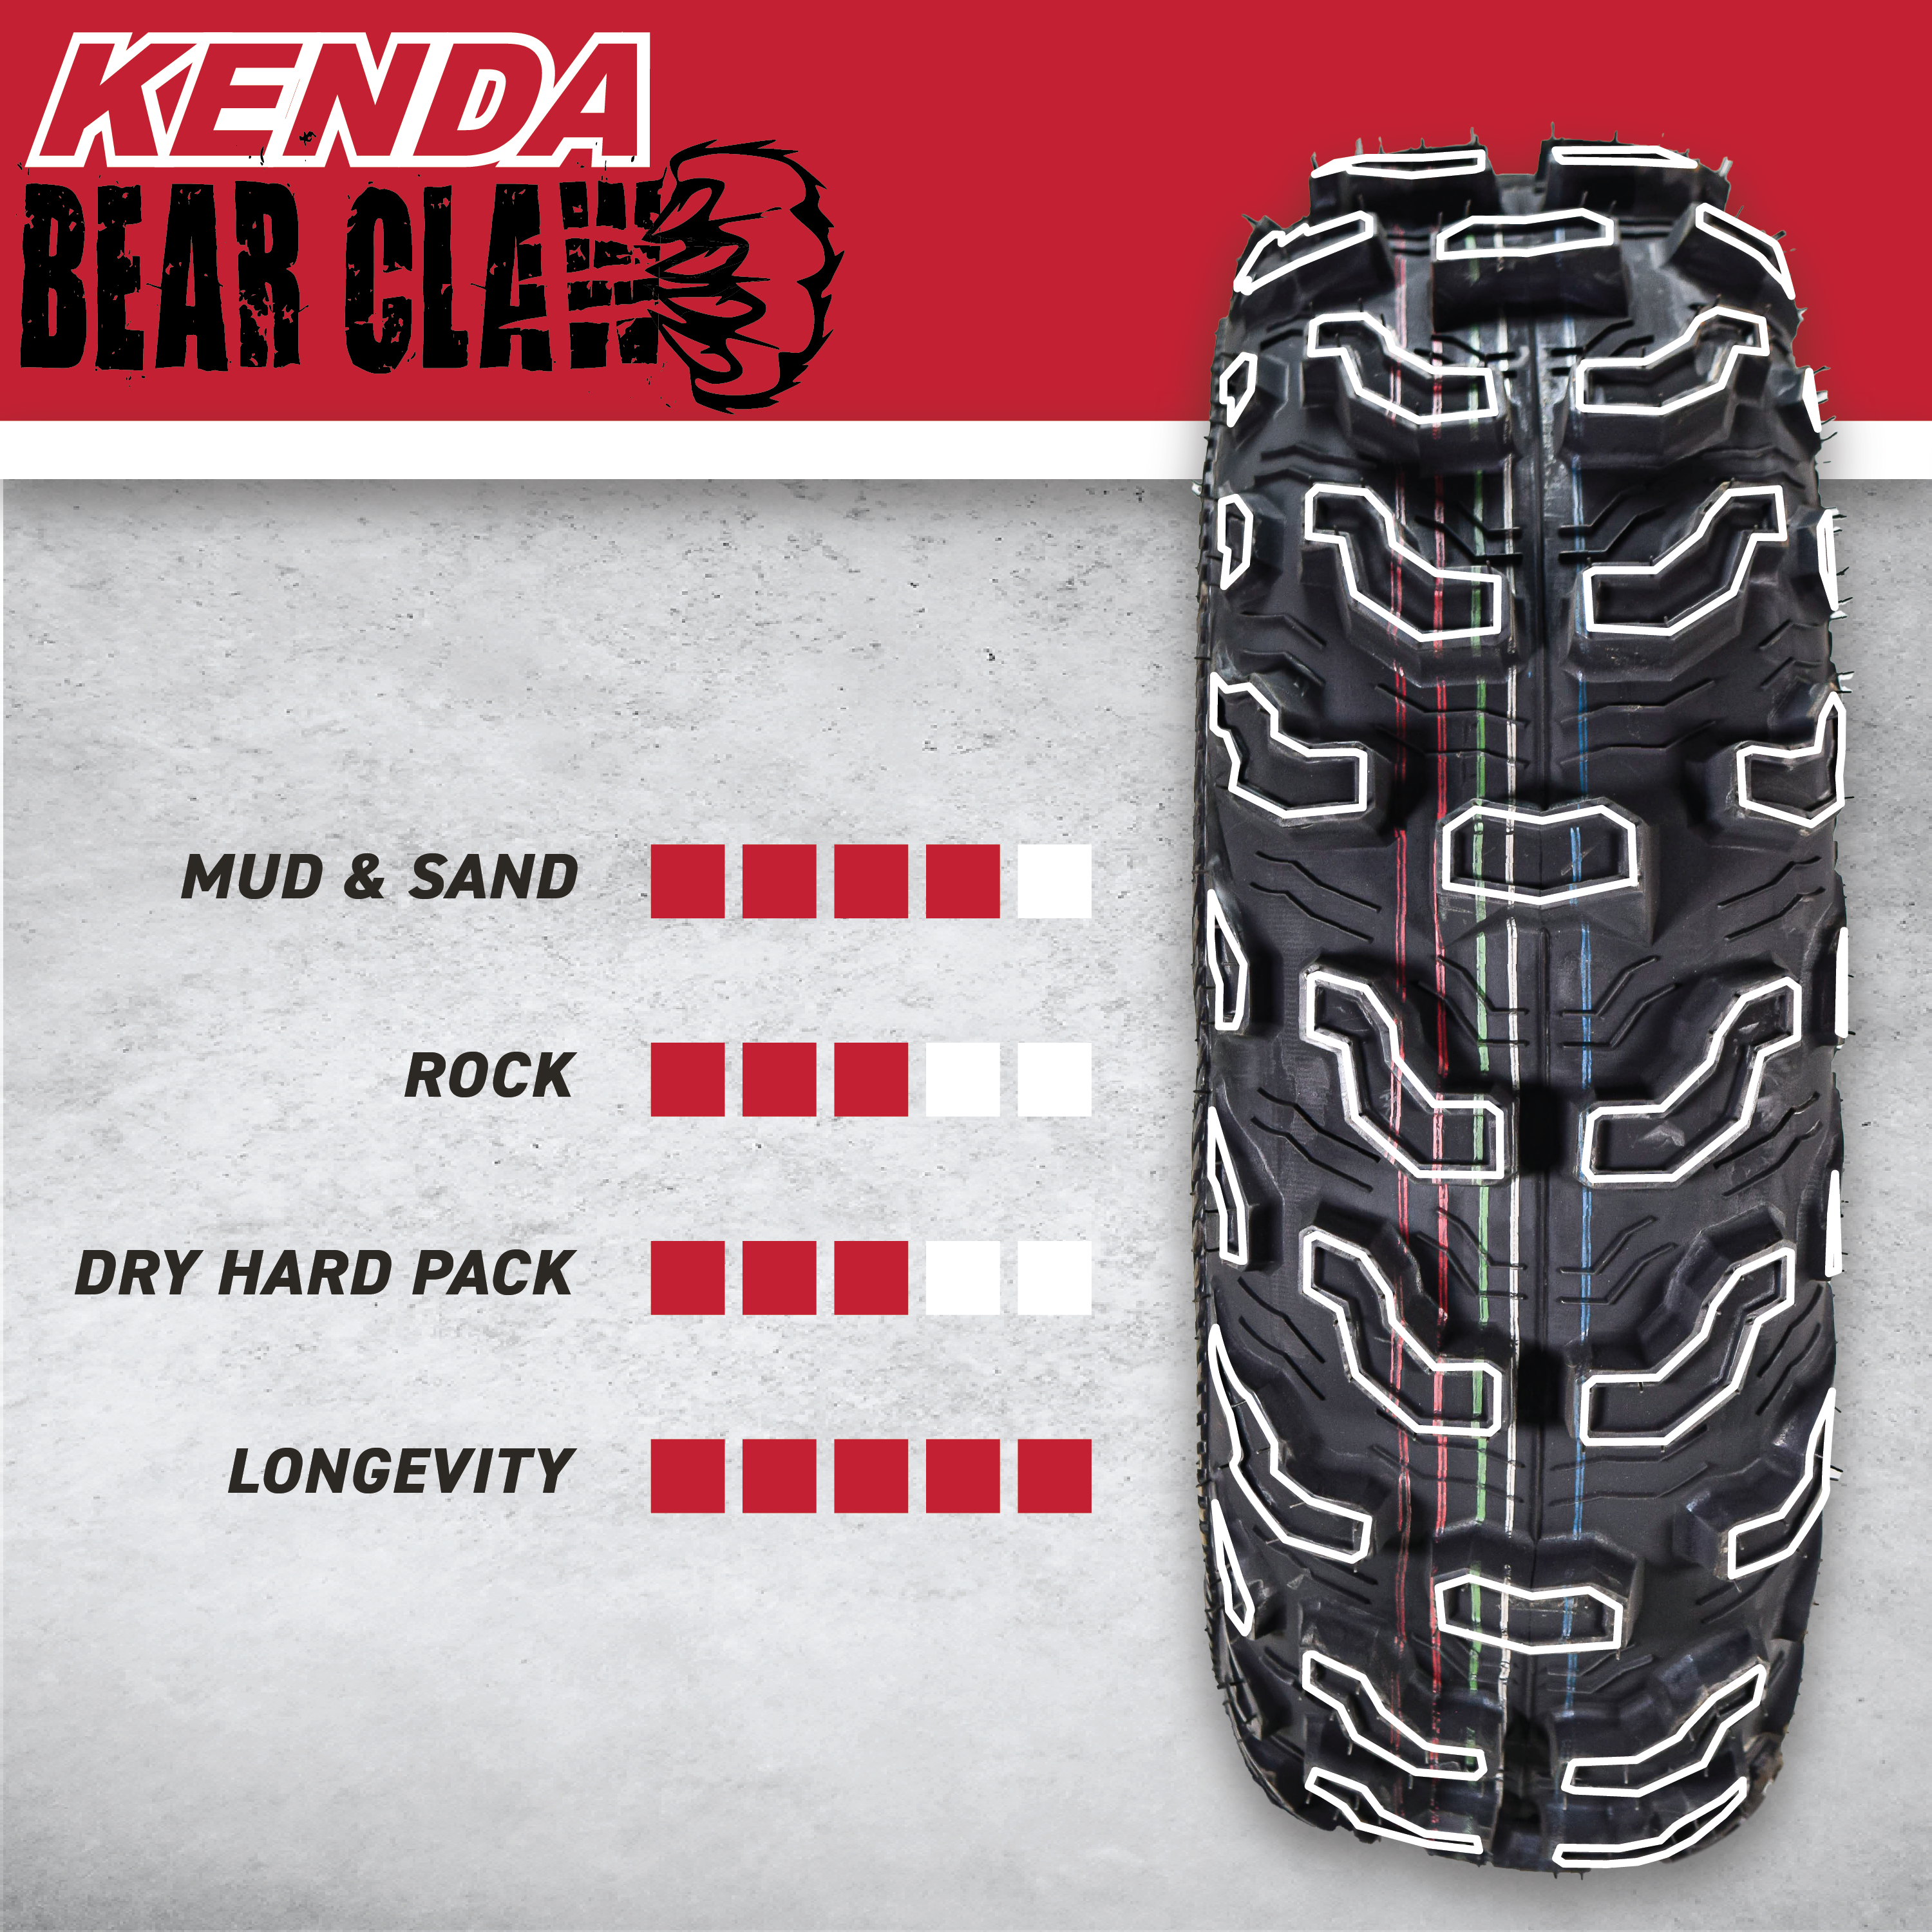 Kenda Bear Claw EX 22x11-10 Rear 6 PLY ATV Tires Bearclaw 22x11x10 (2 Pack)